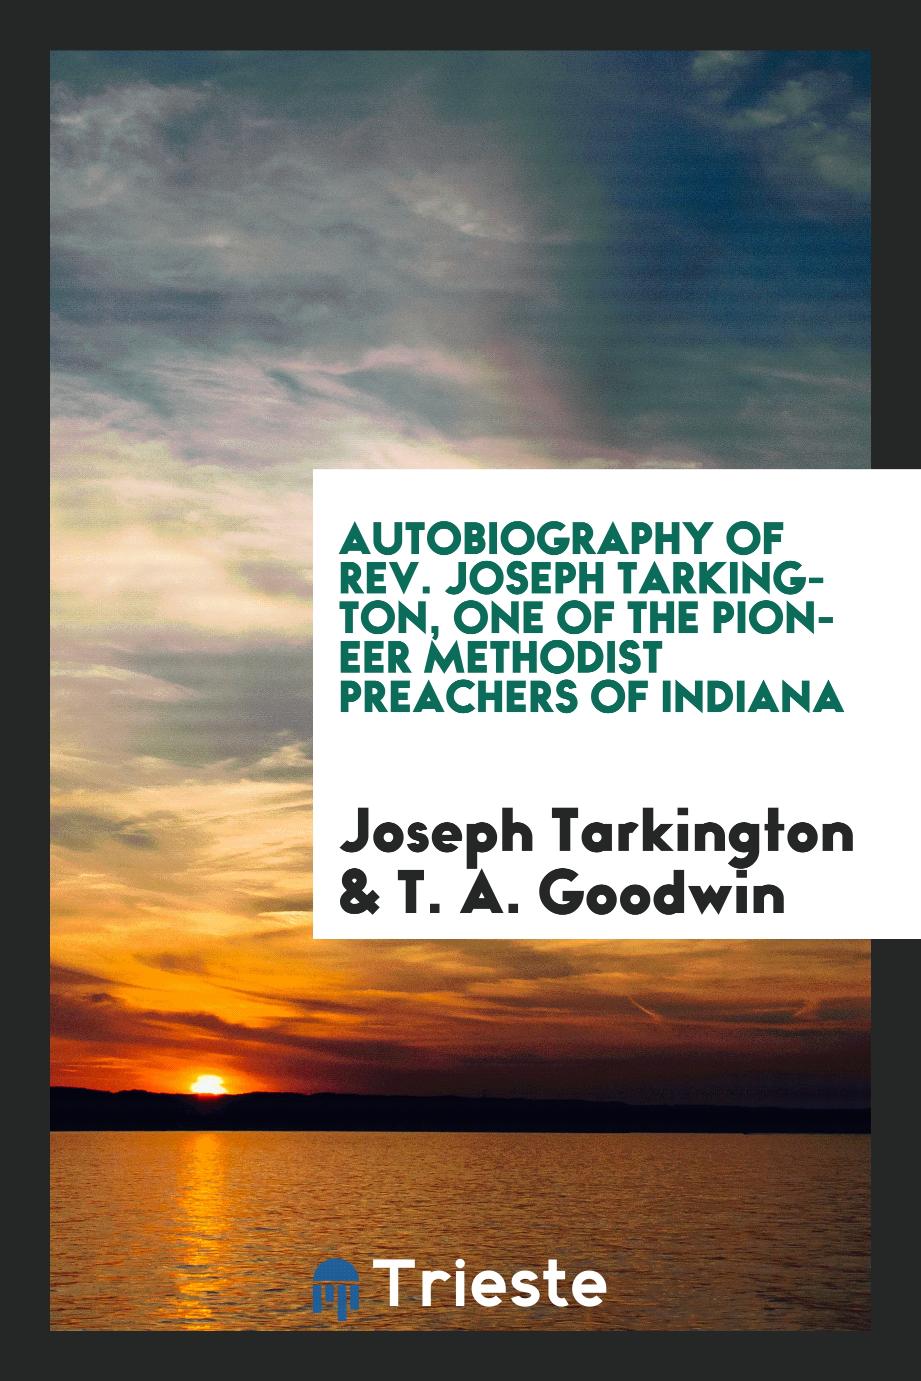 Autobiography of Rev. Joseph Tarkington, one of the pioneer Methodist preachers of Indiana